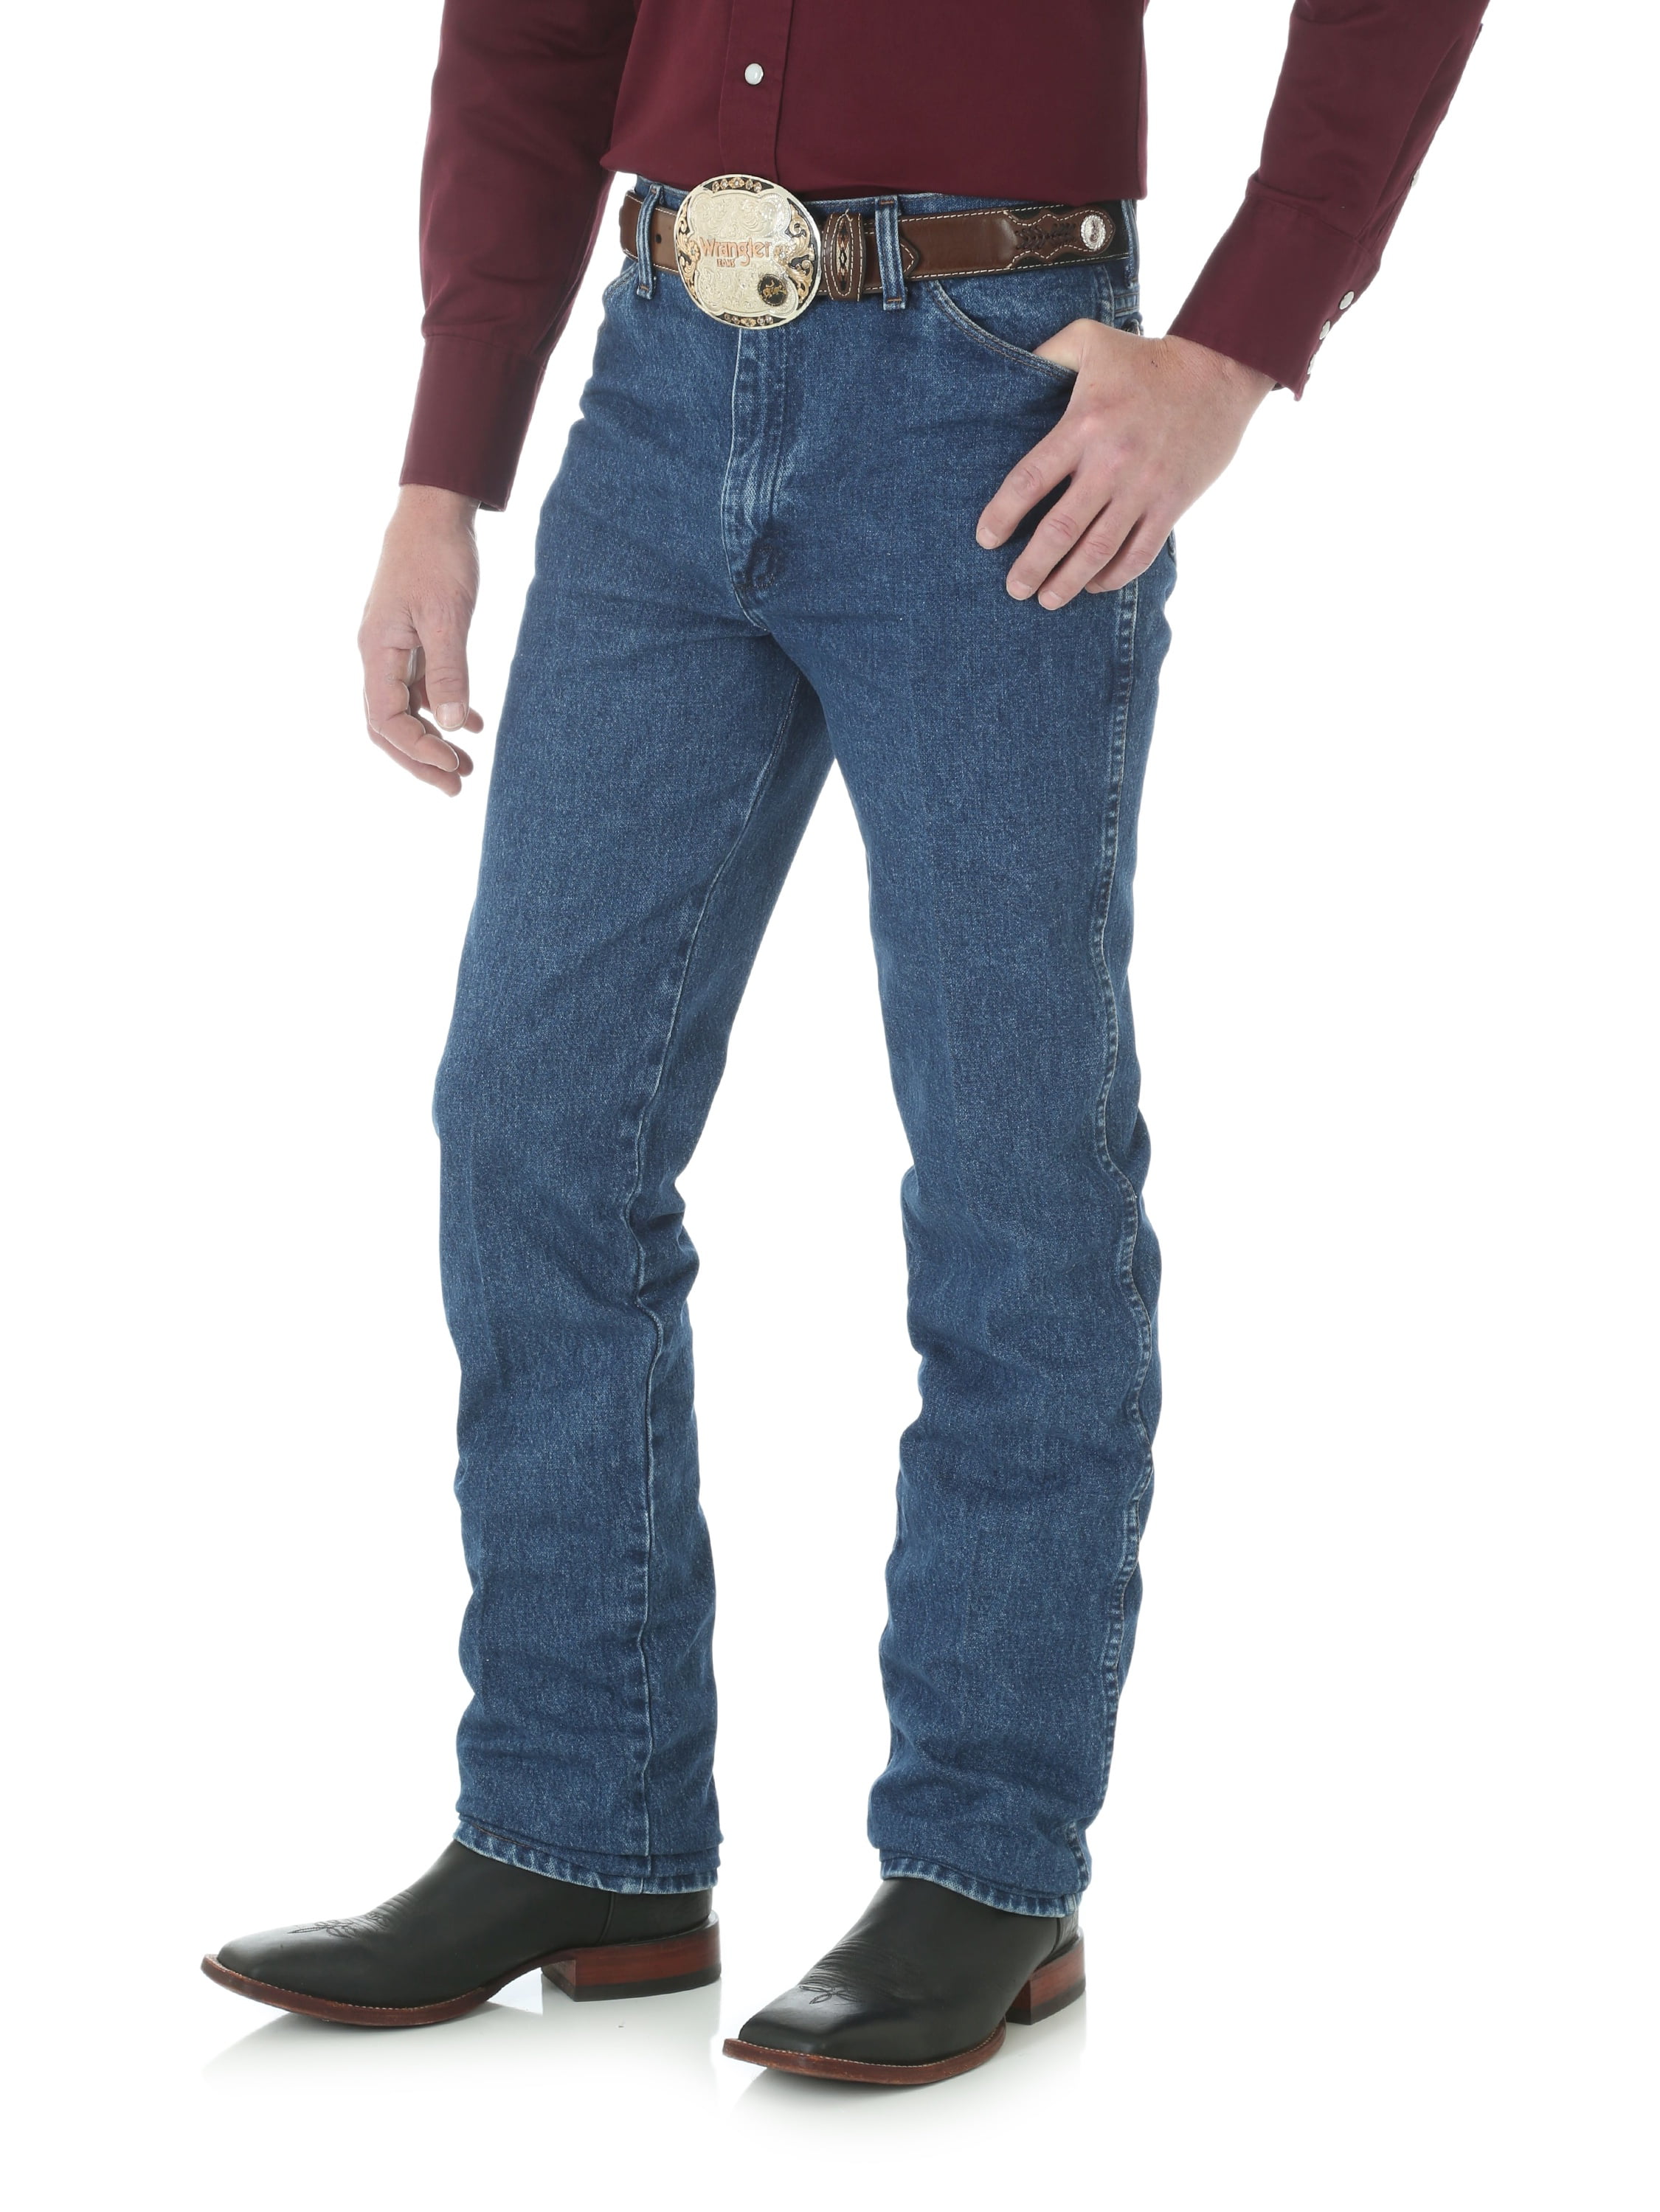 Wrangler Men's Western Cowboy Cut Slim Fit Jean - Antique Wash 